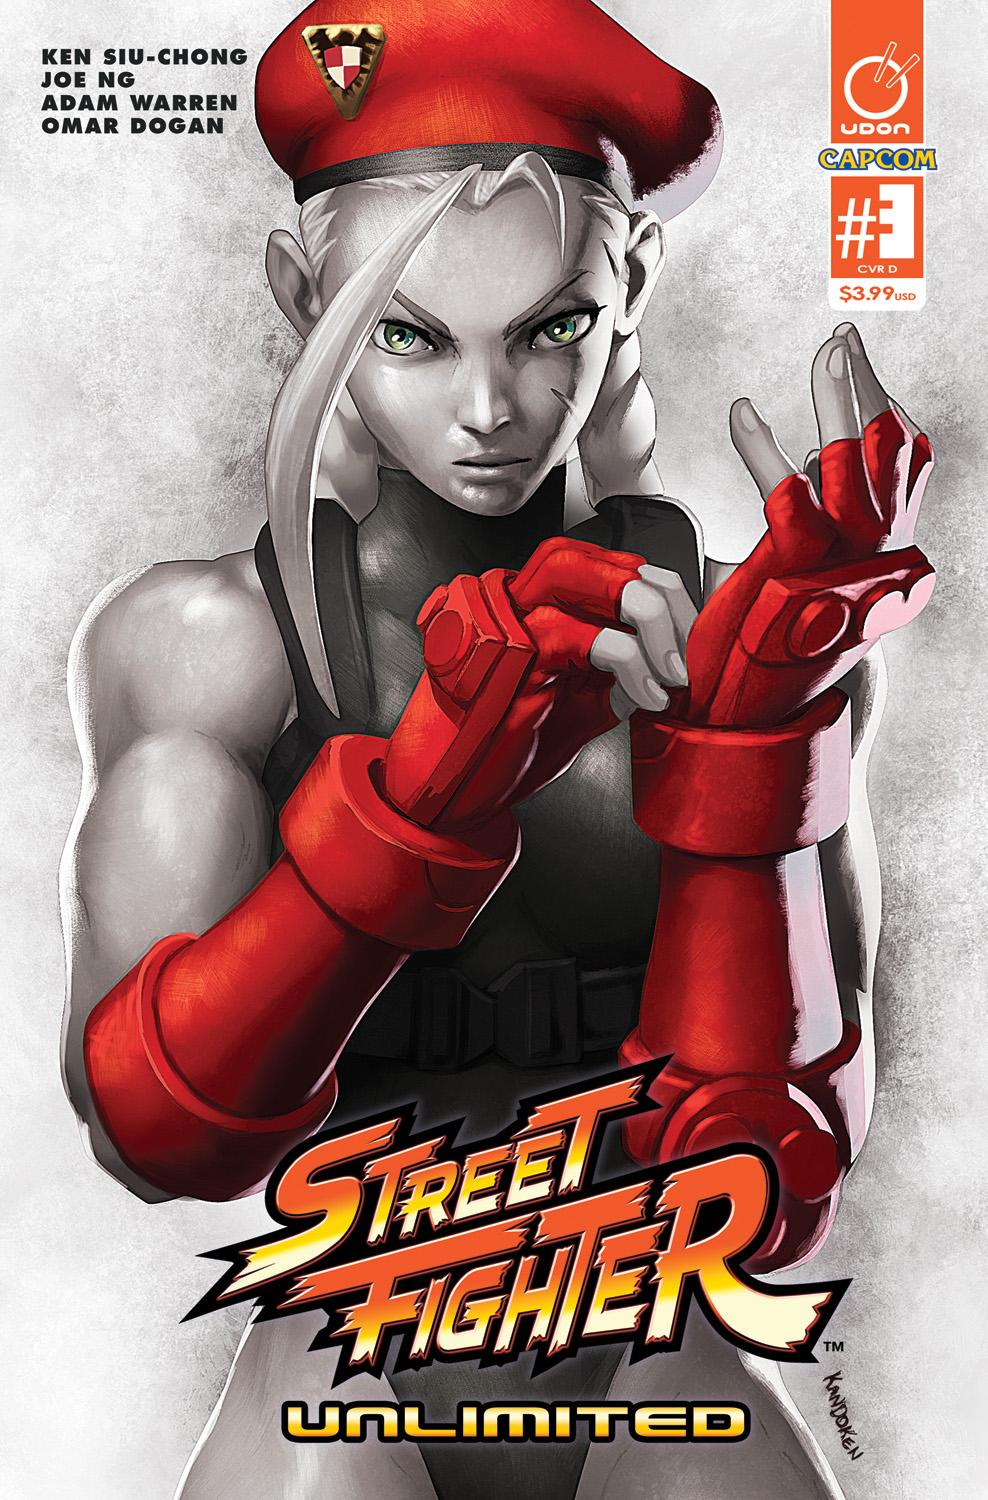 APR162014 - STREET FIGHTER UNLIMITED #7 CVR C MOVIE VAR - Previews World